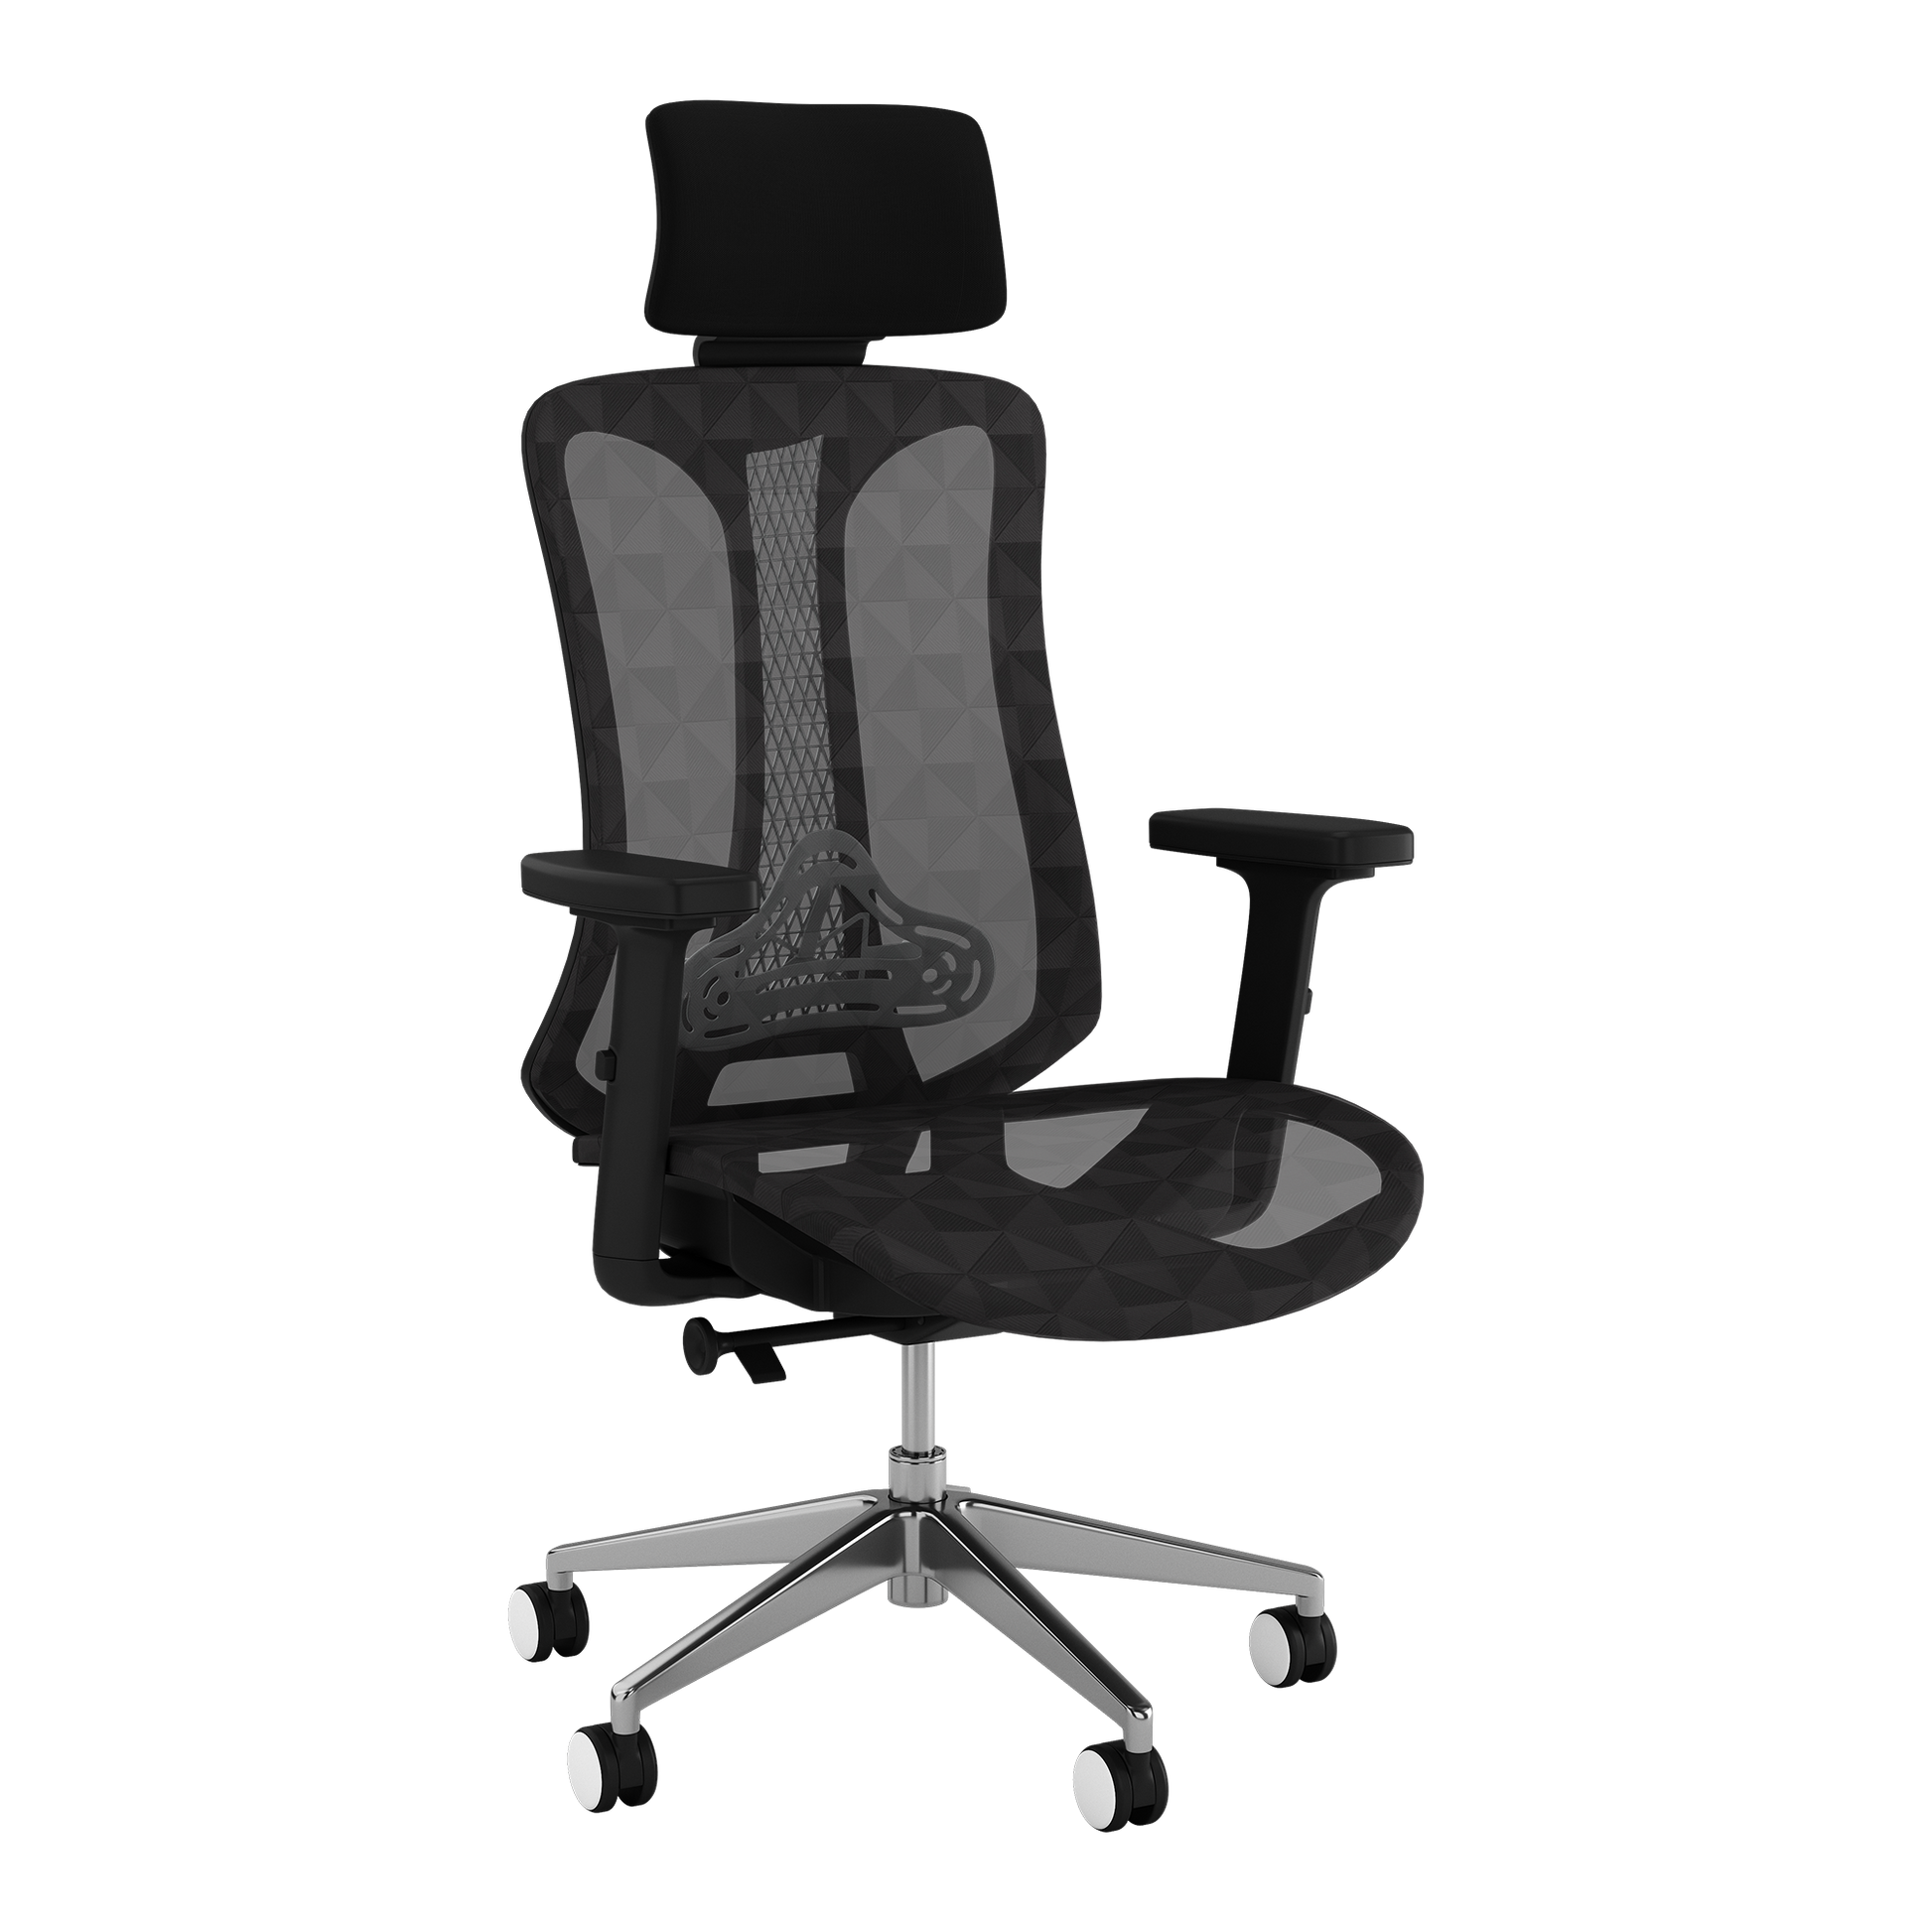 Ergonomic Office Chair 001, Black